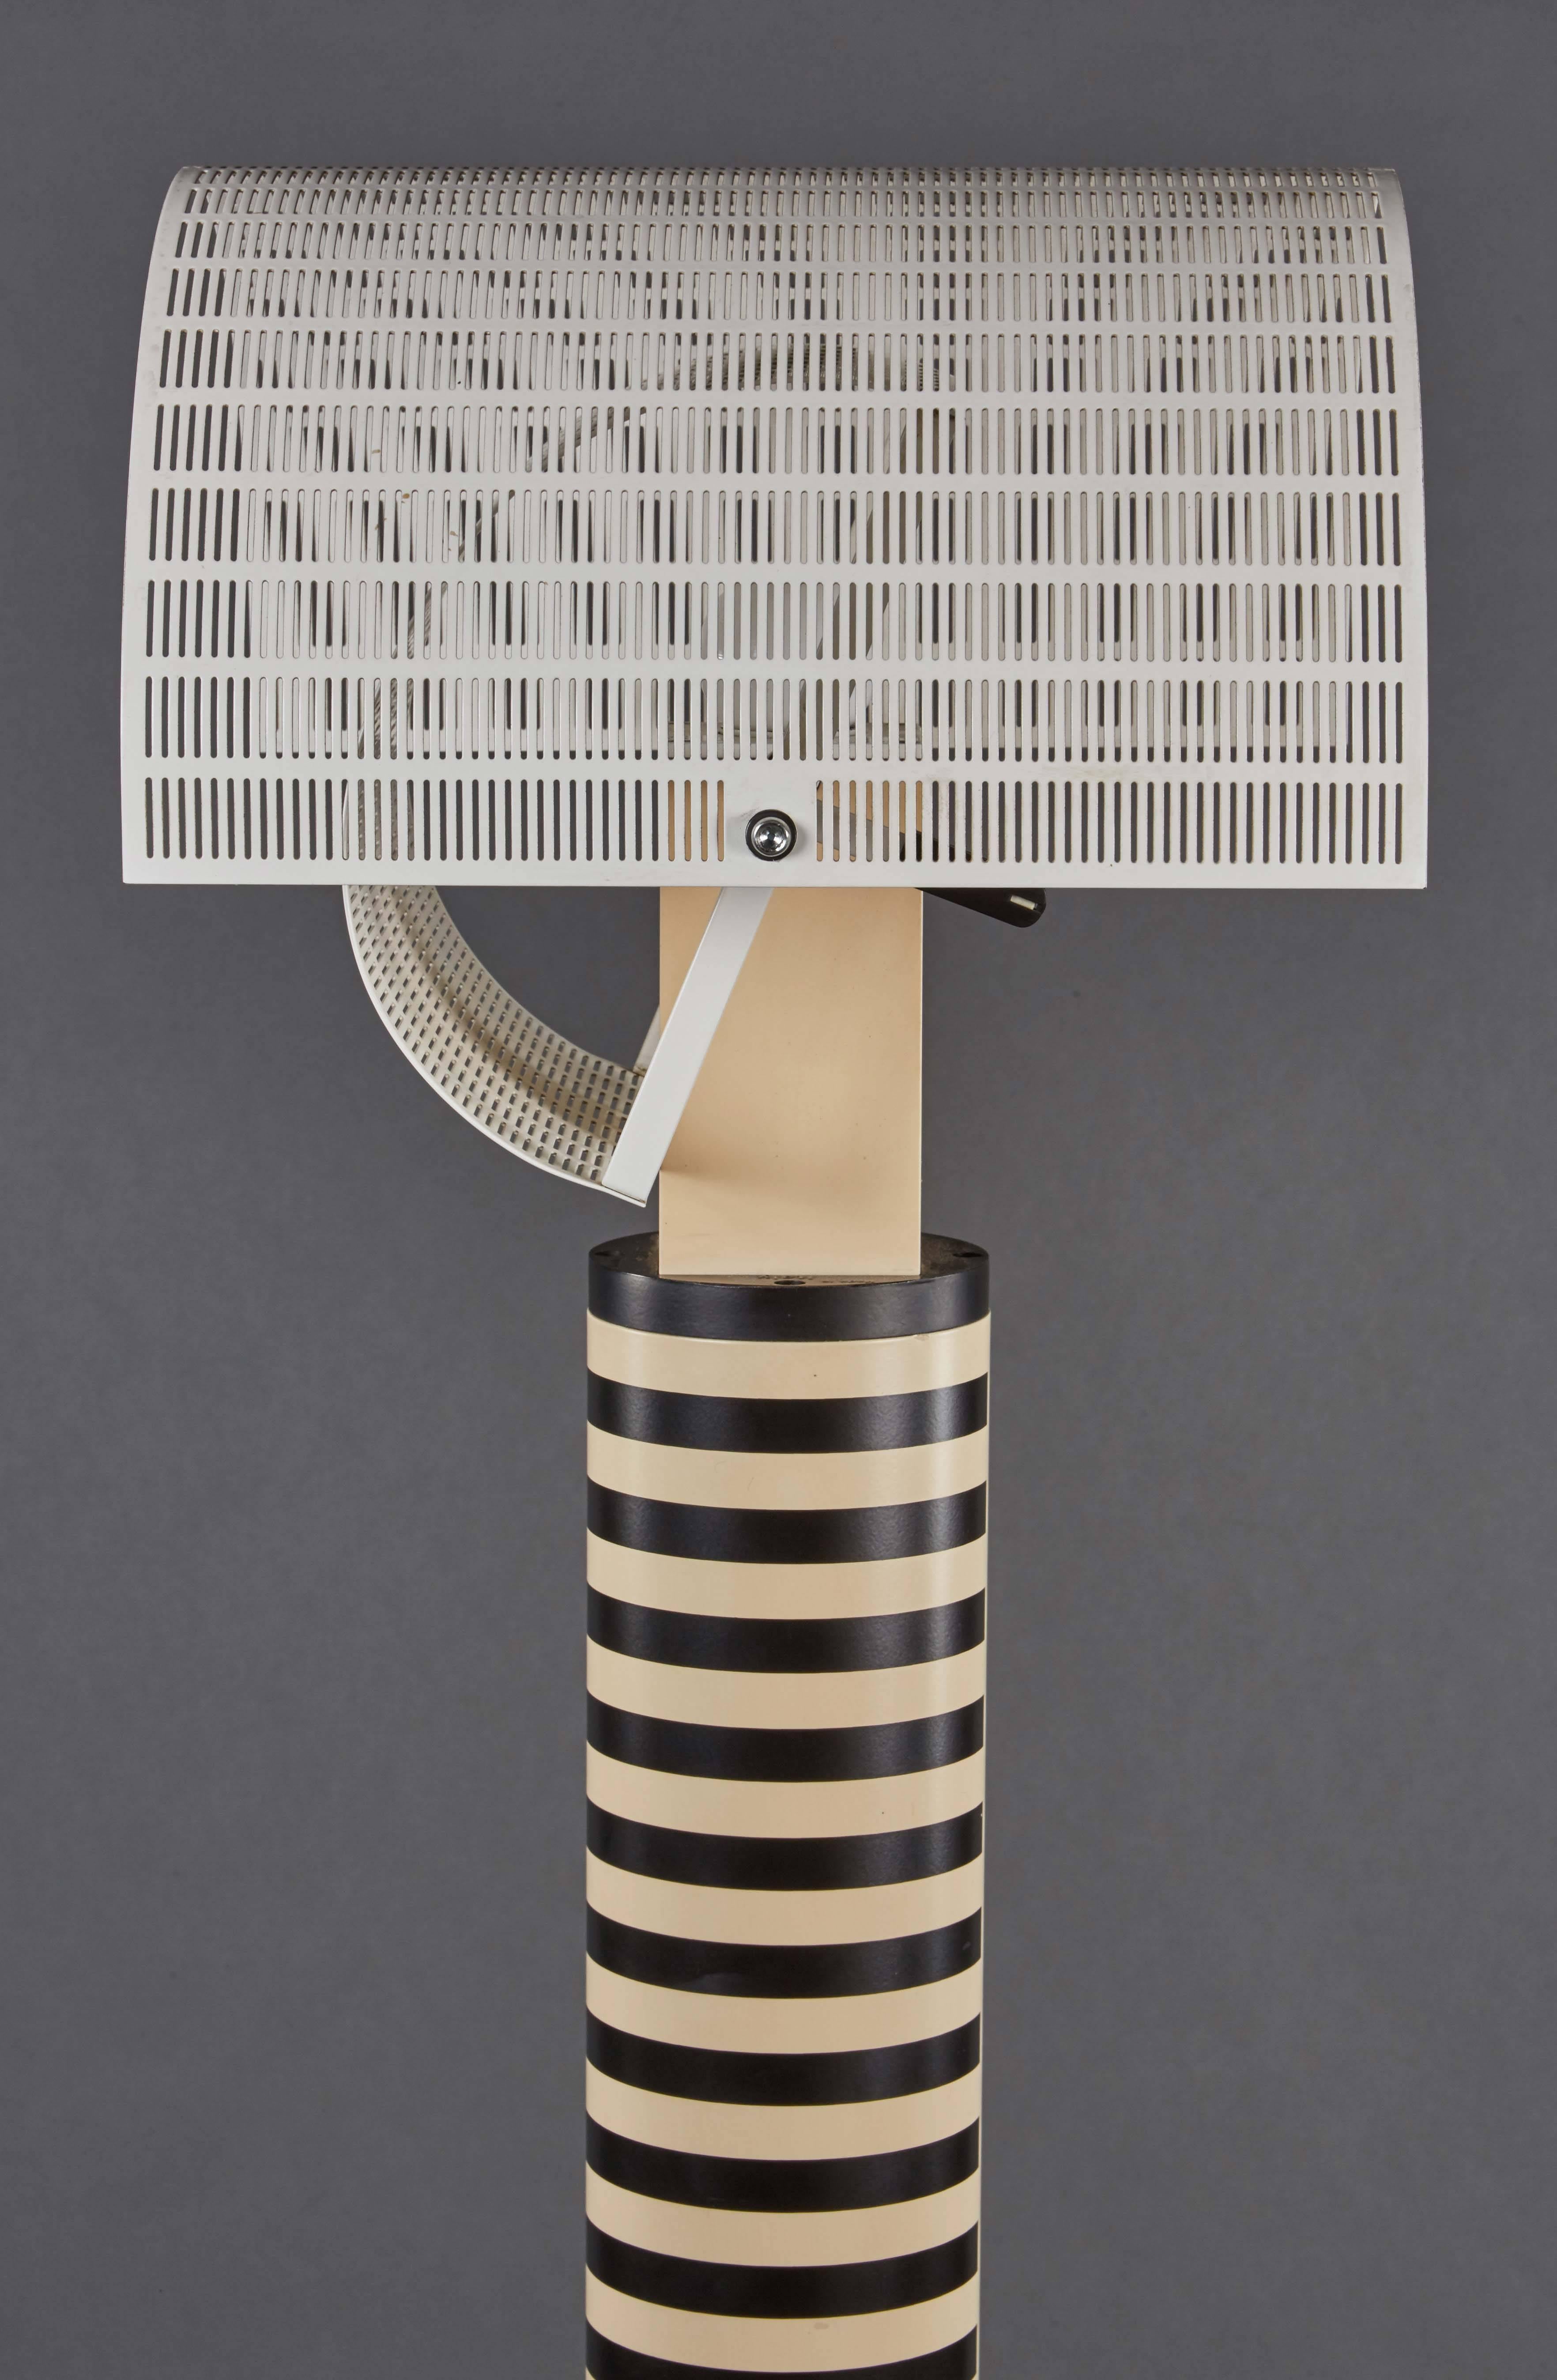 Shogun Terra Floor Lamp by Mario Botta for Artemide In Good Condition For Sale In Los Angeles, CA